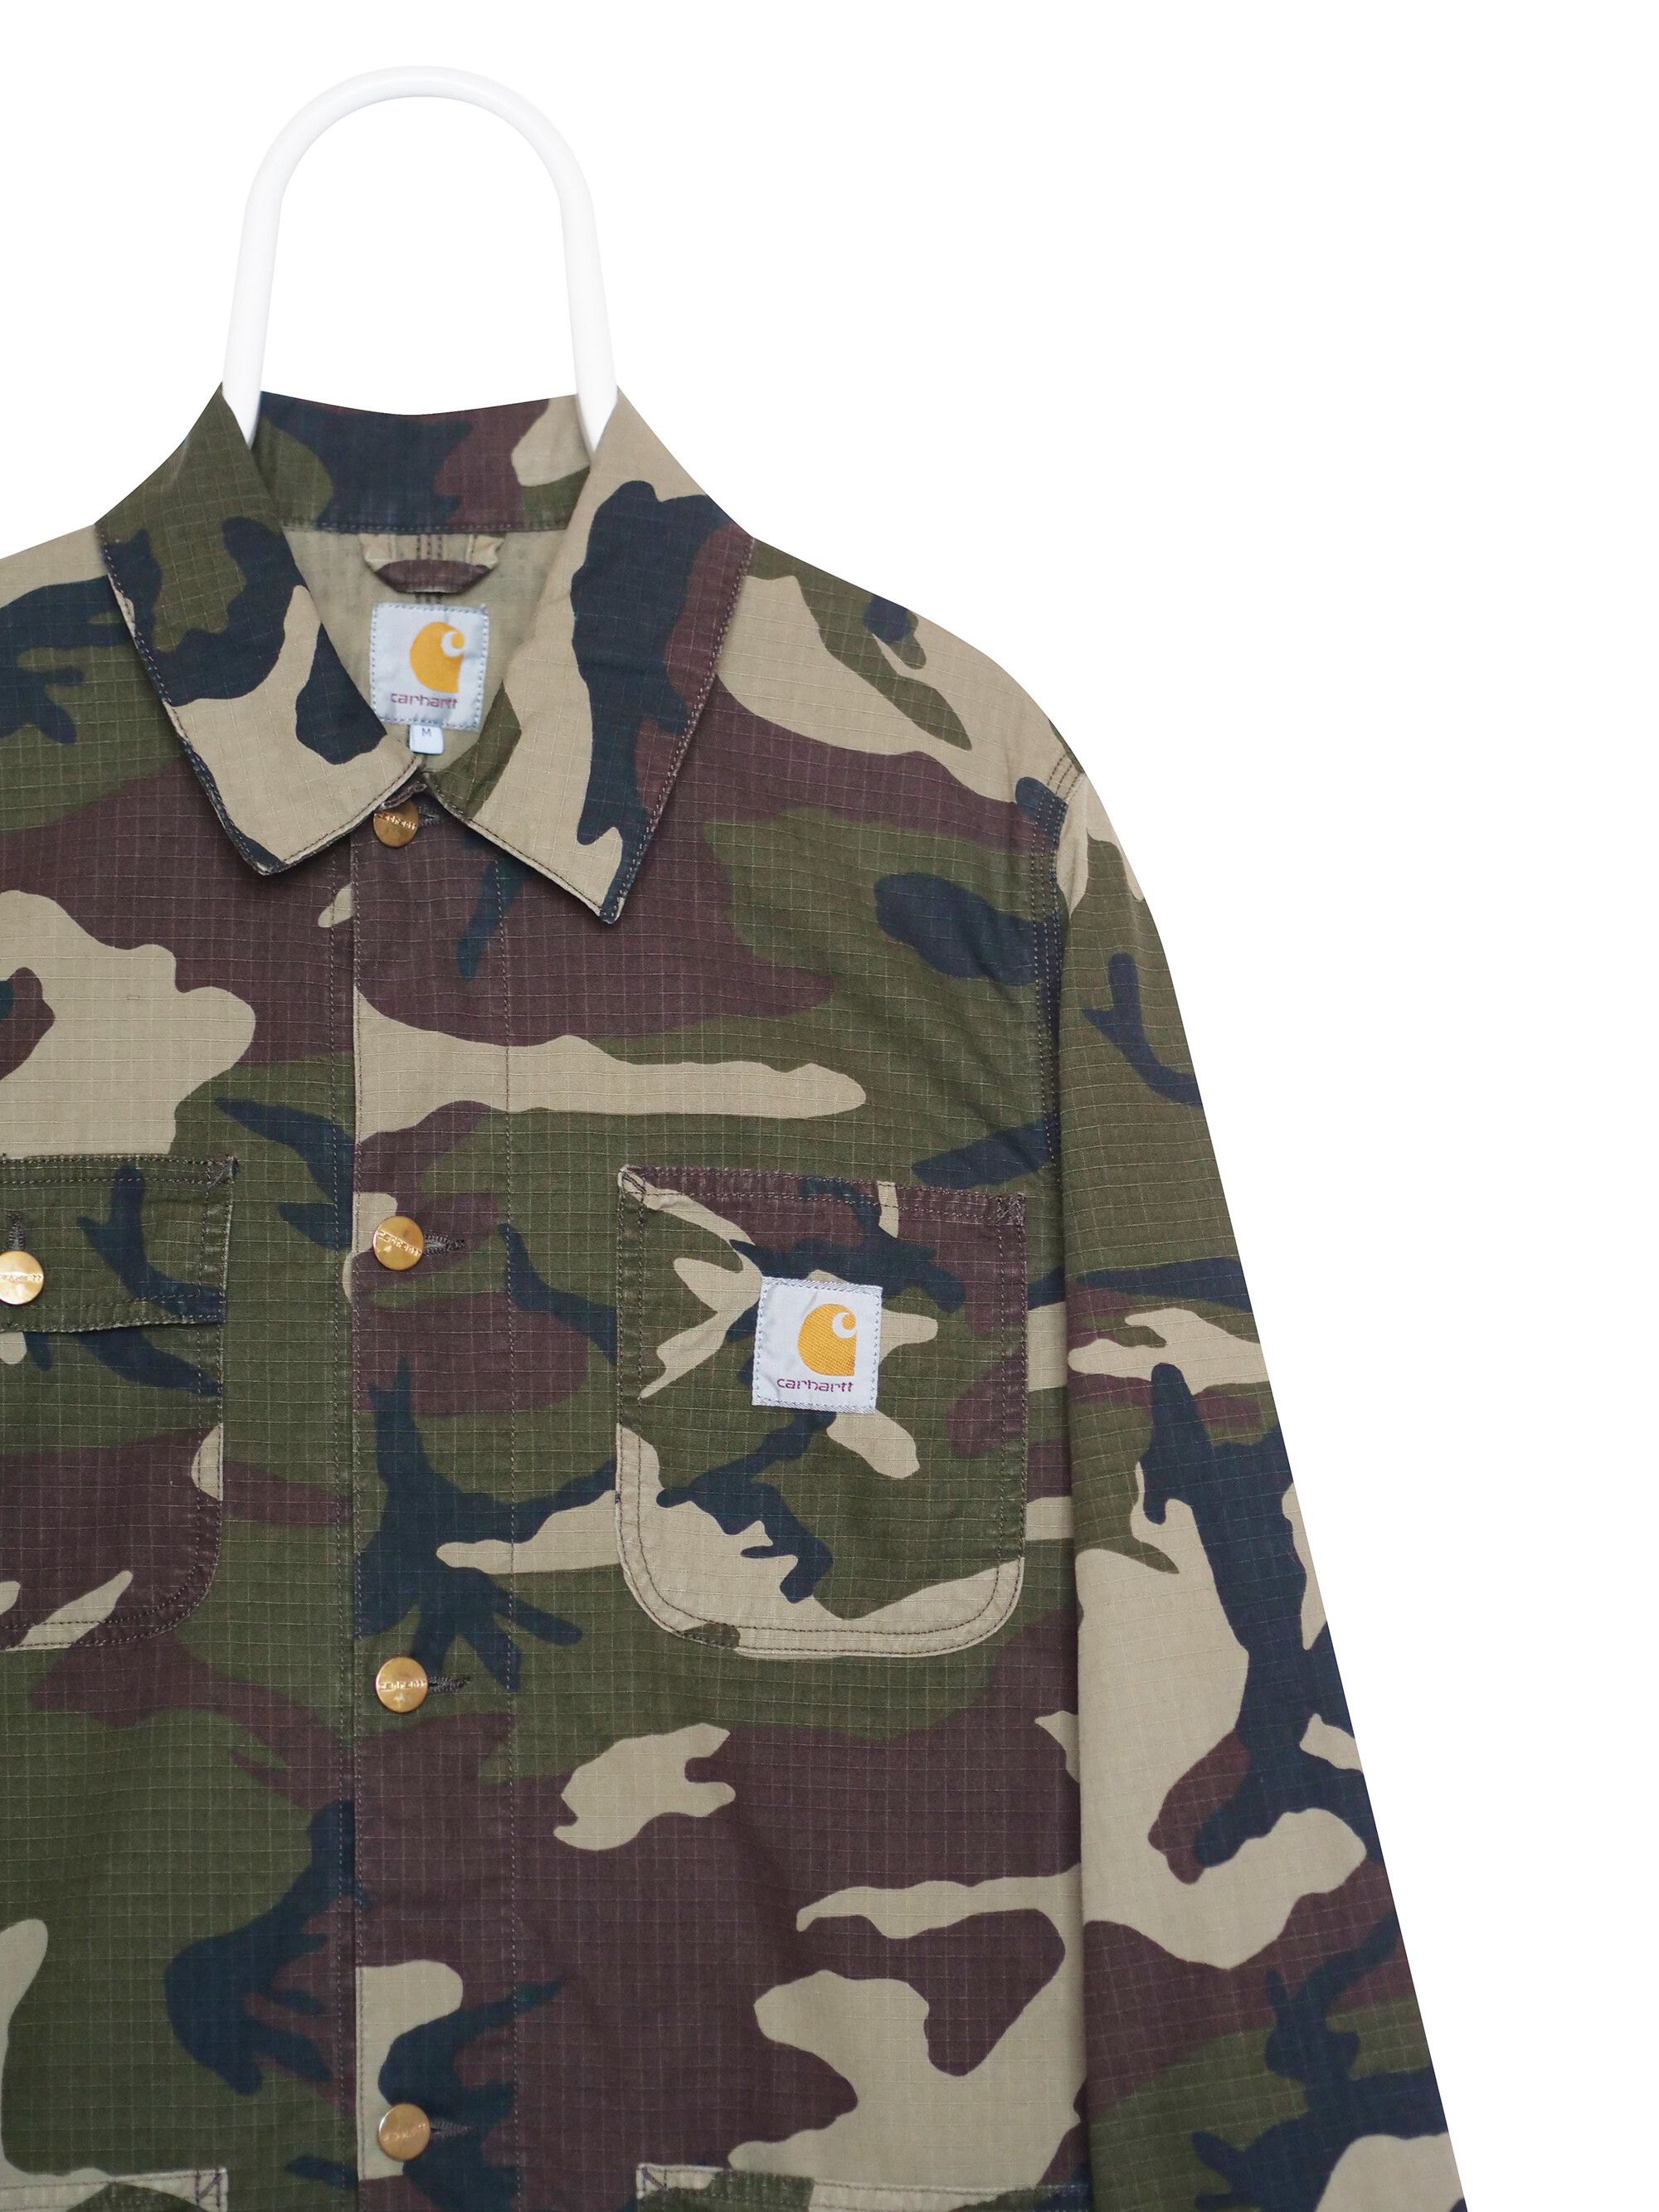 Carhartt Carhartt military shirt | Grailed